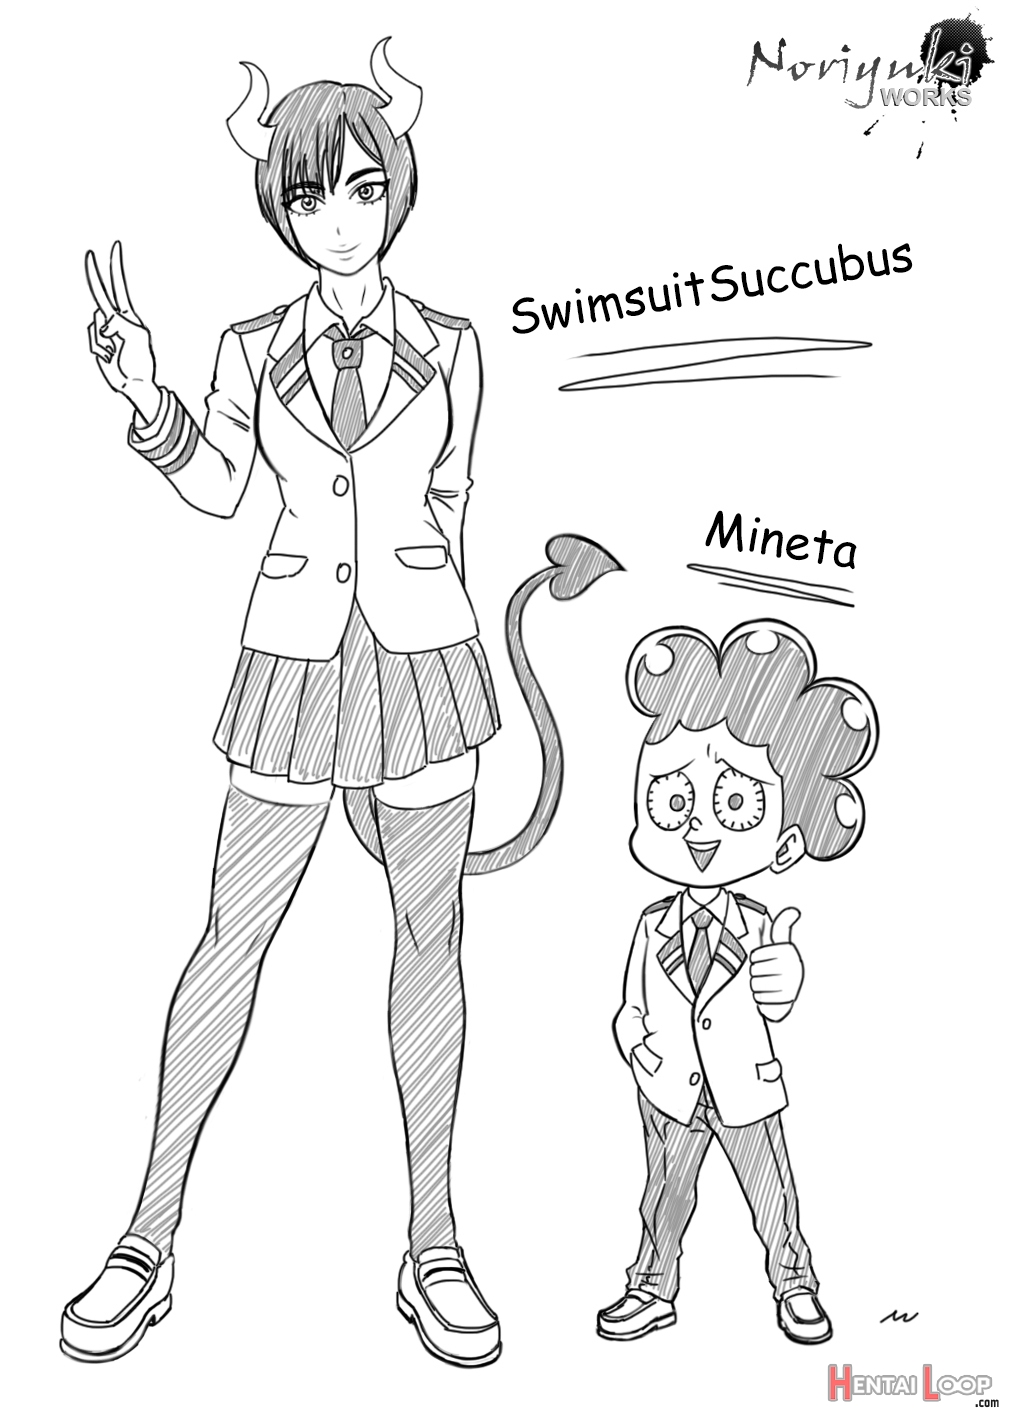 Swimsuitsuccubus X Mineta page 1